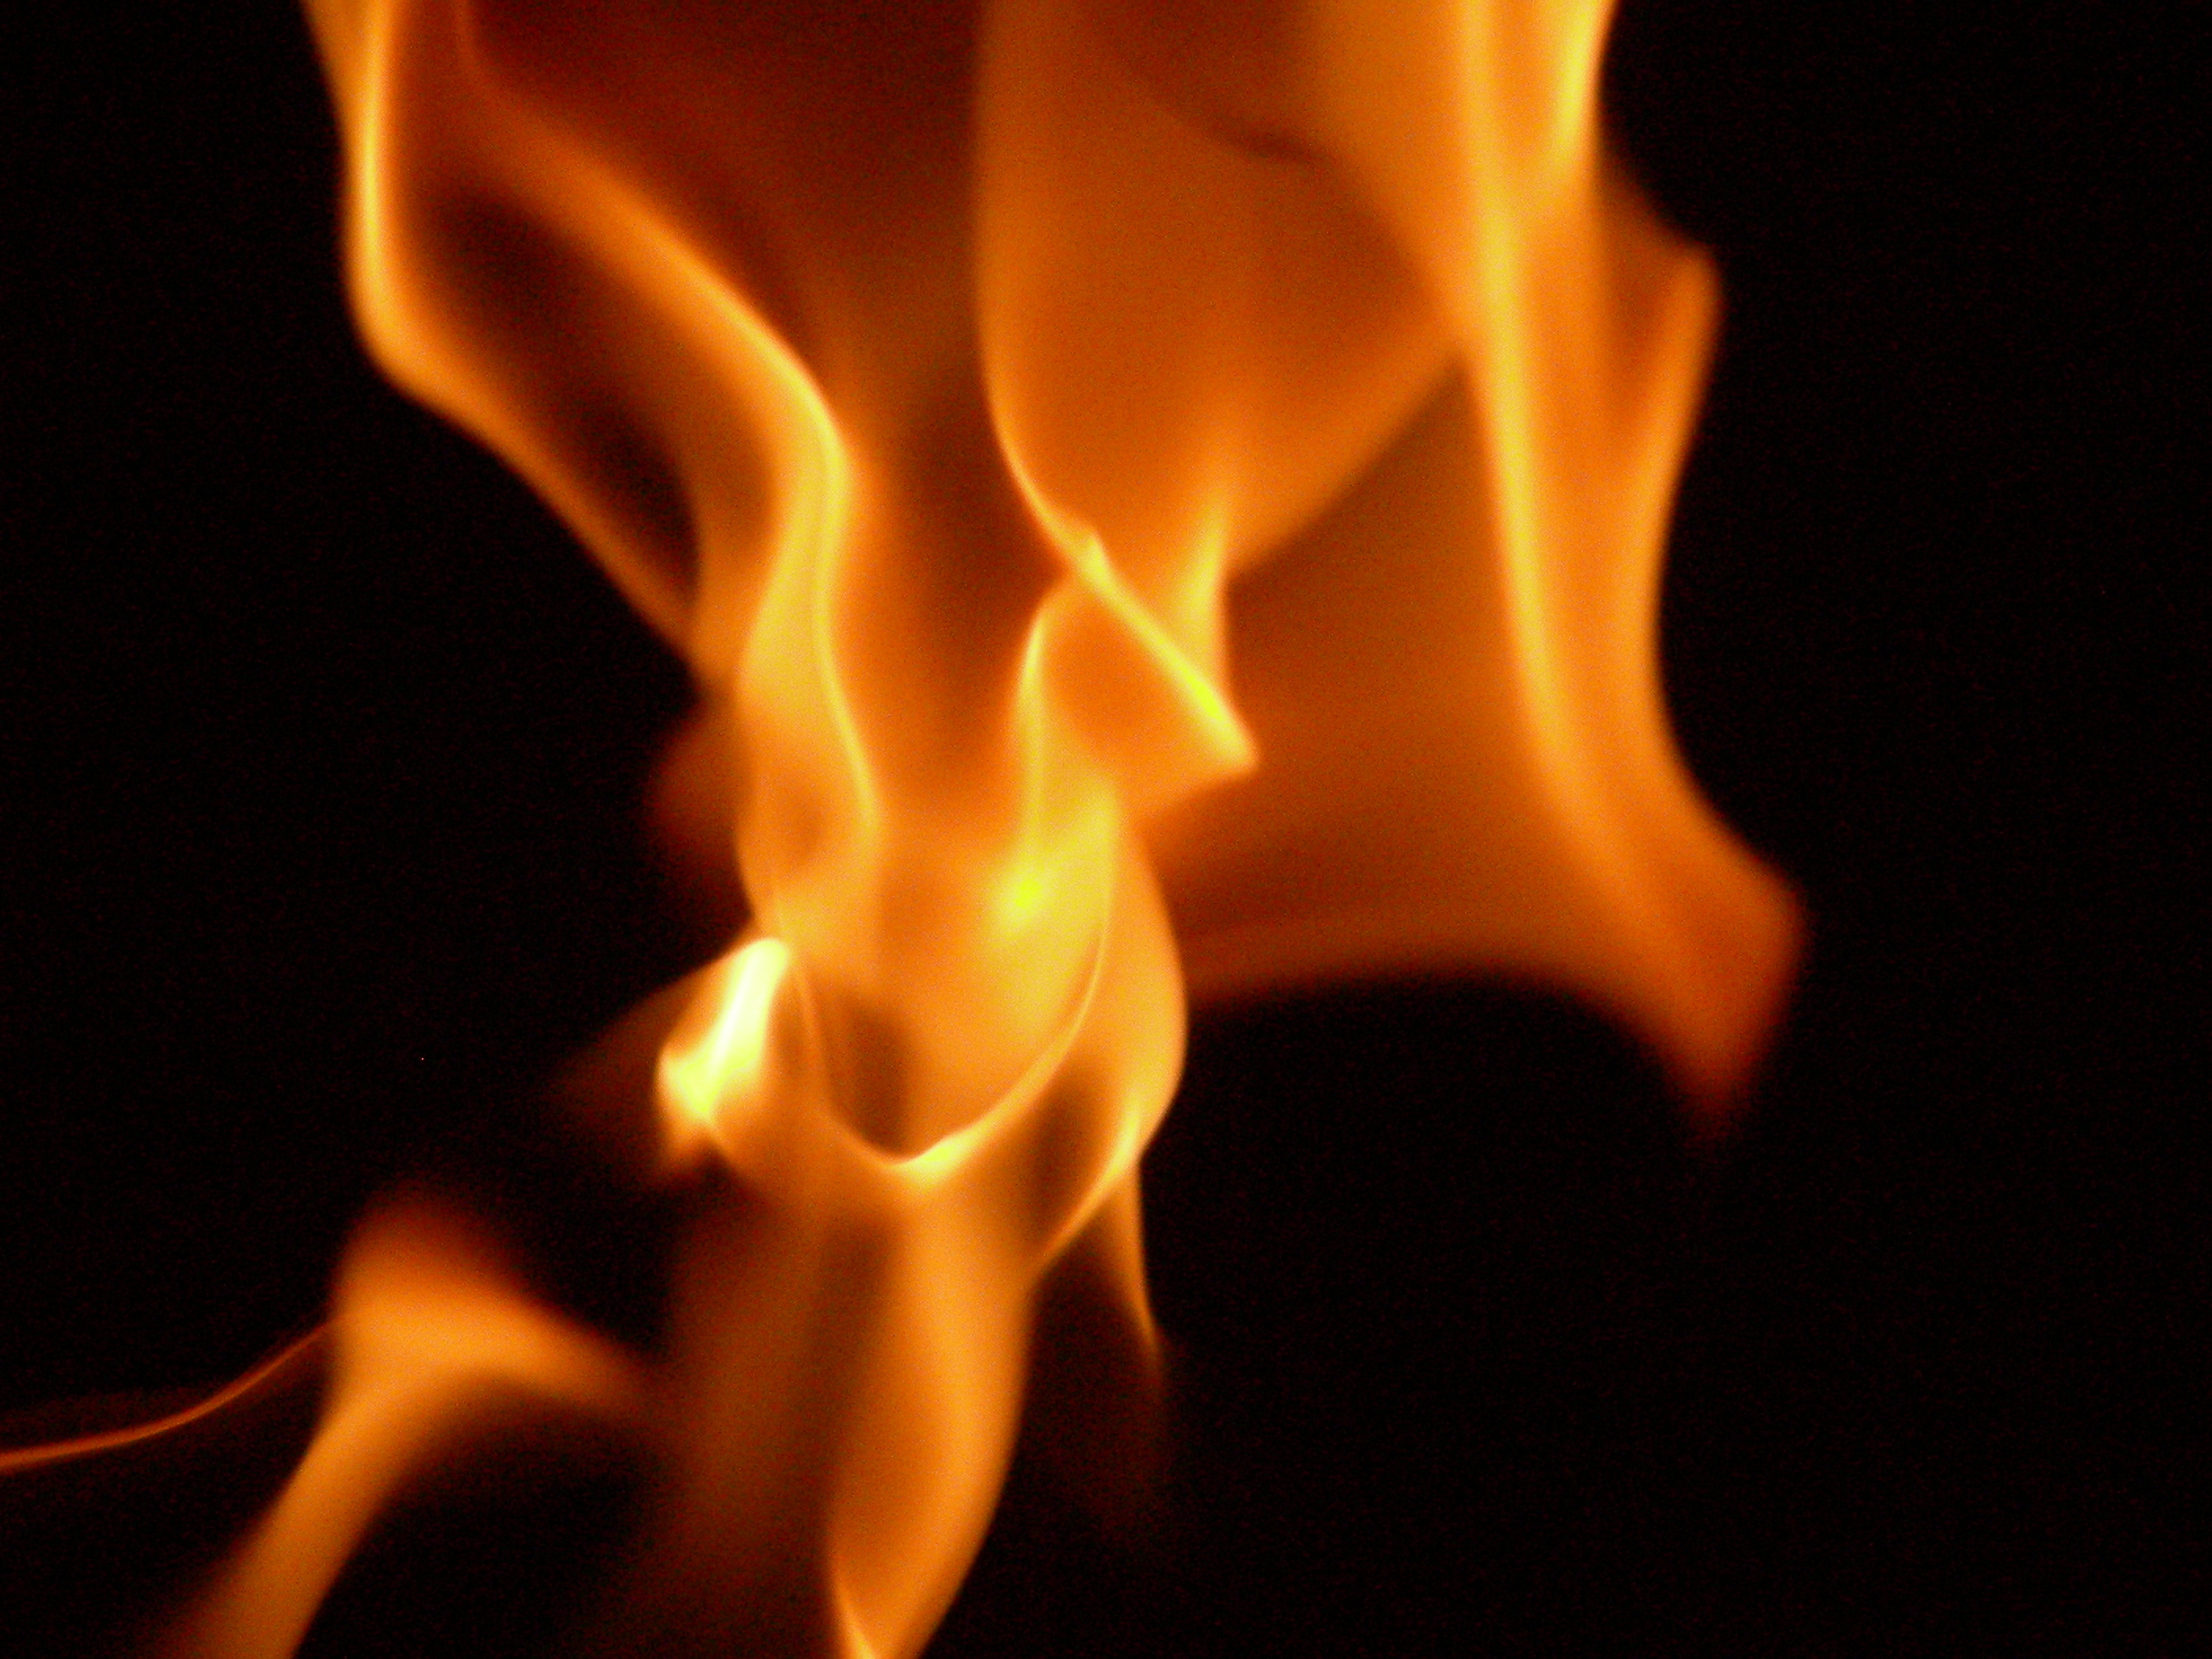 Burning flames